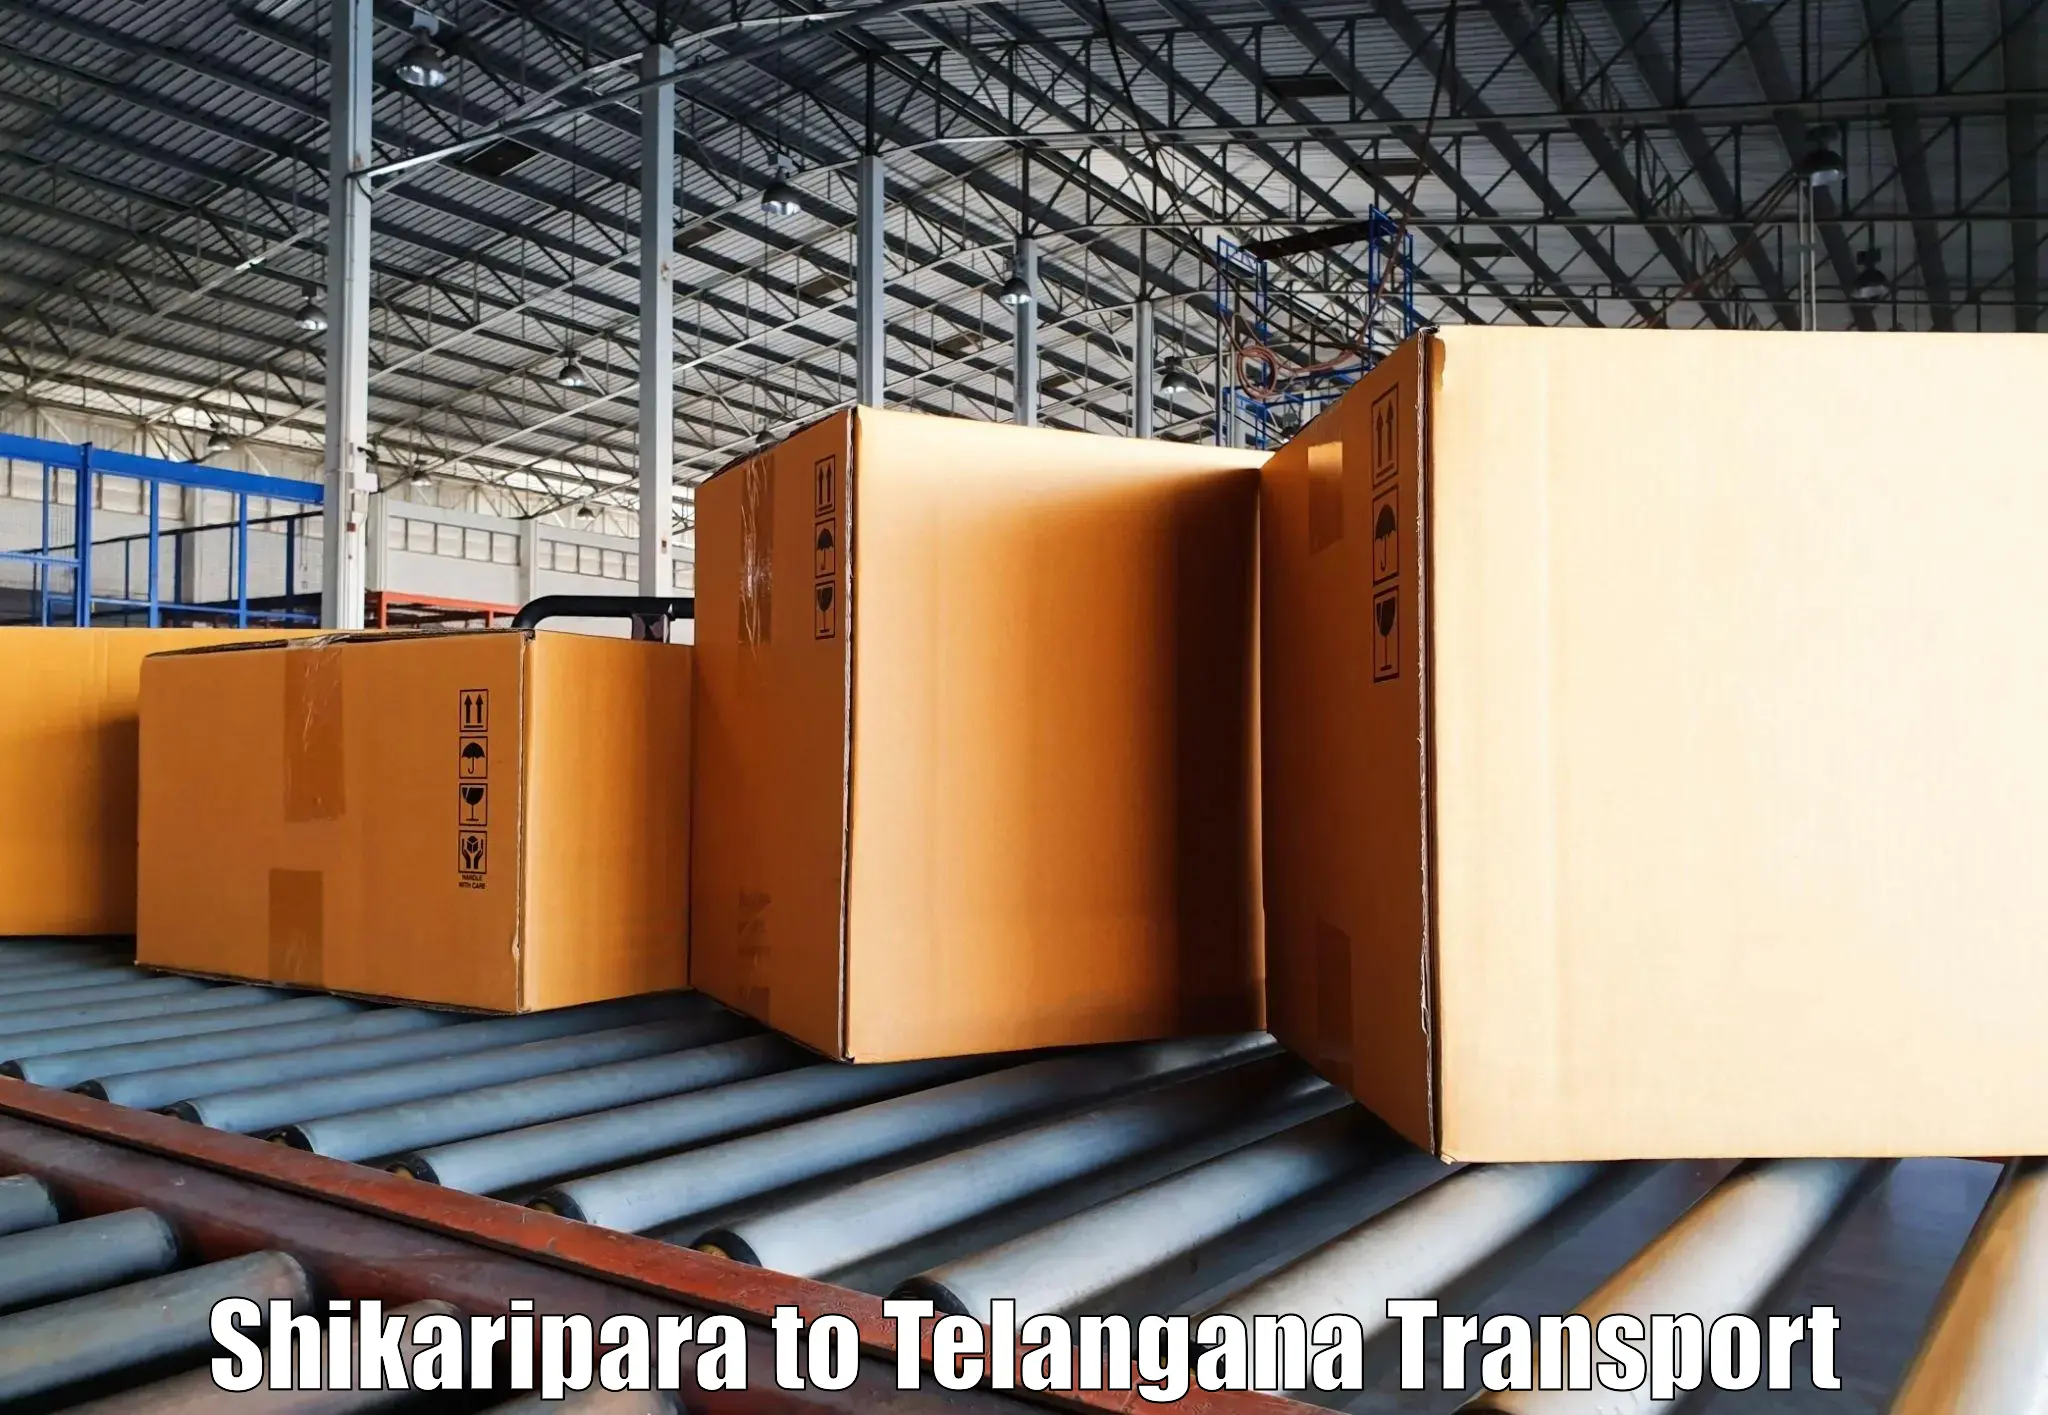 Transport in sharing Shikaripara to Veenavanka